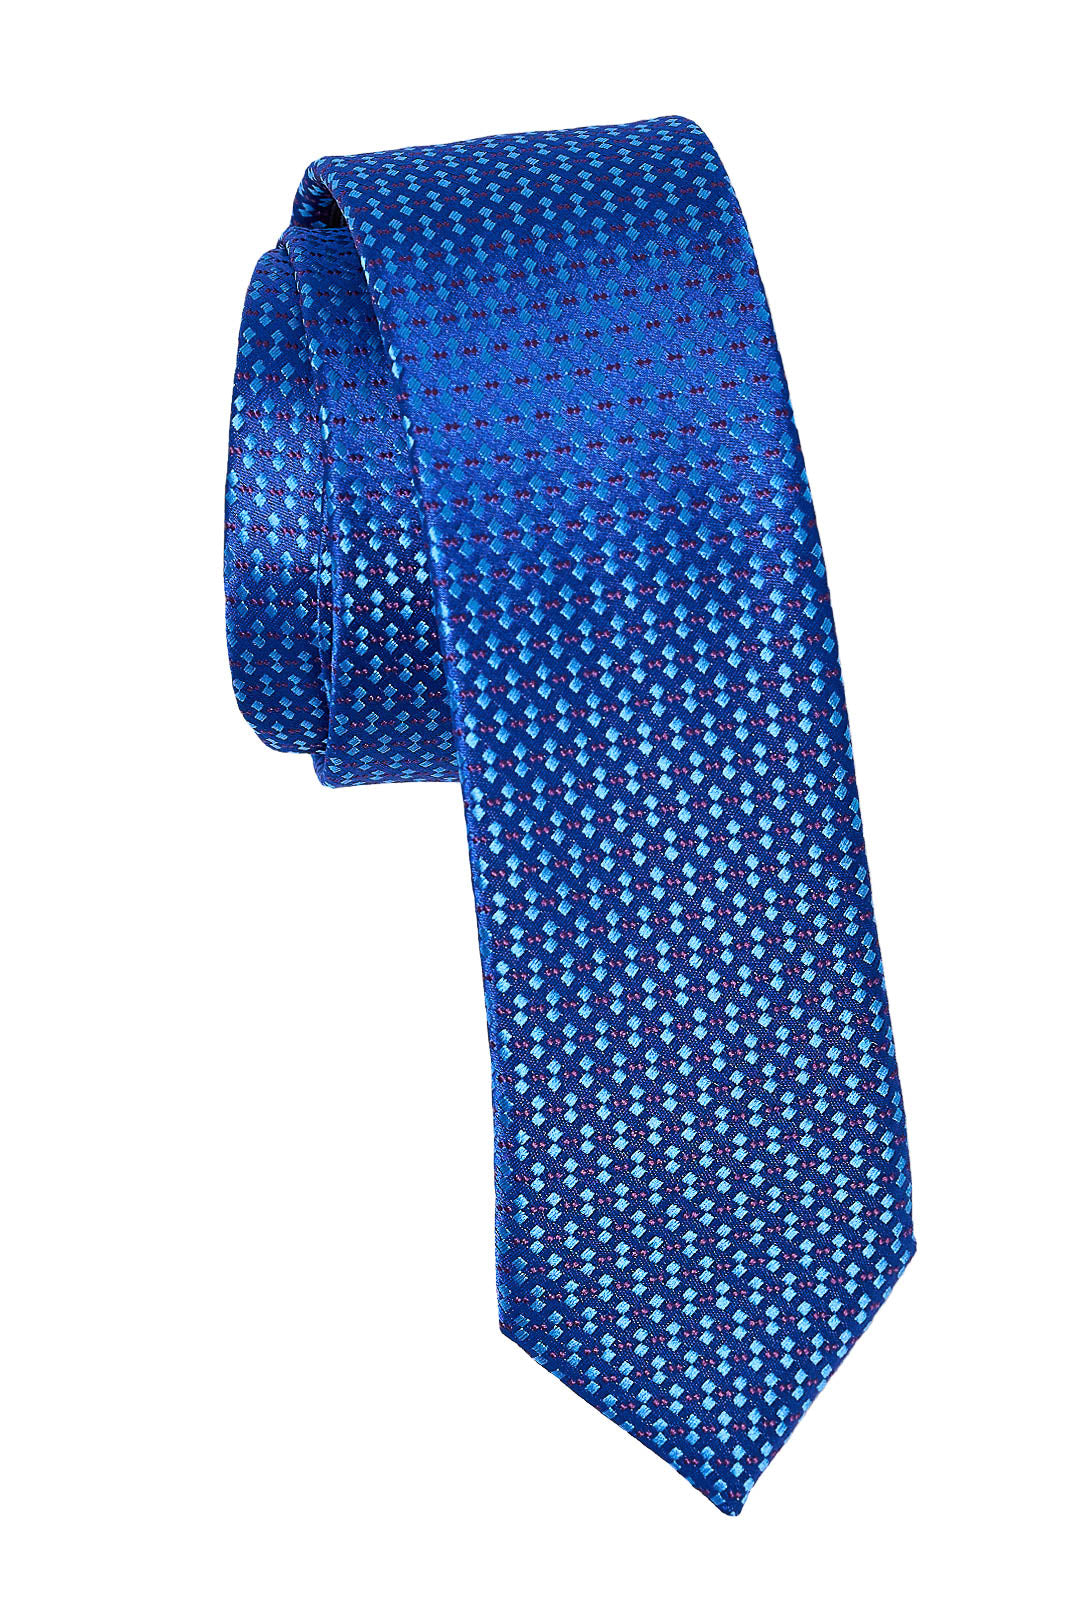 Electric Blue Diamond Tie